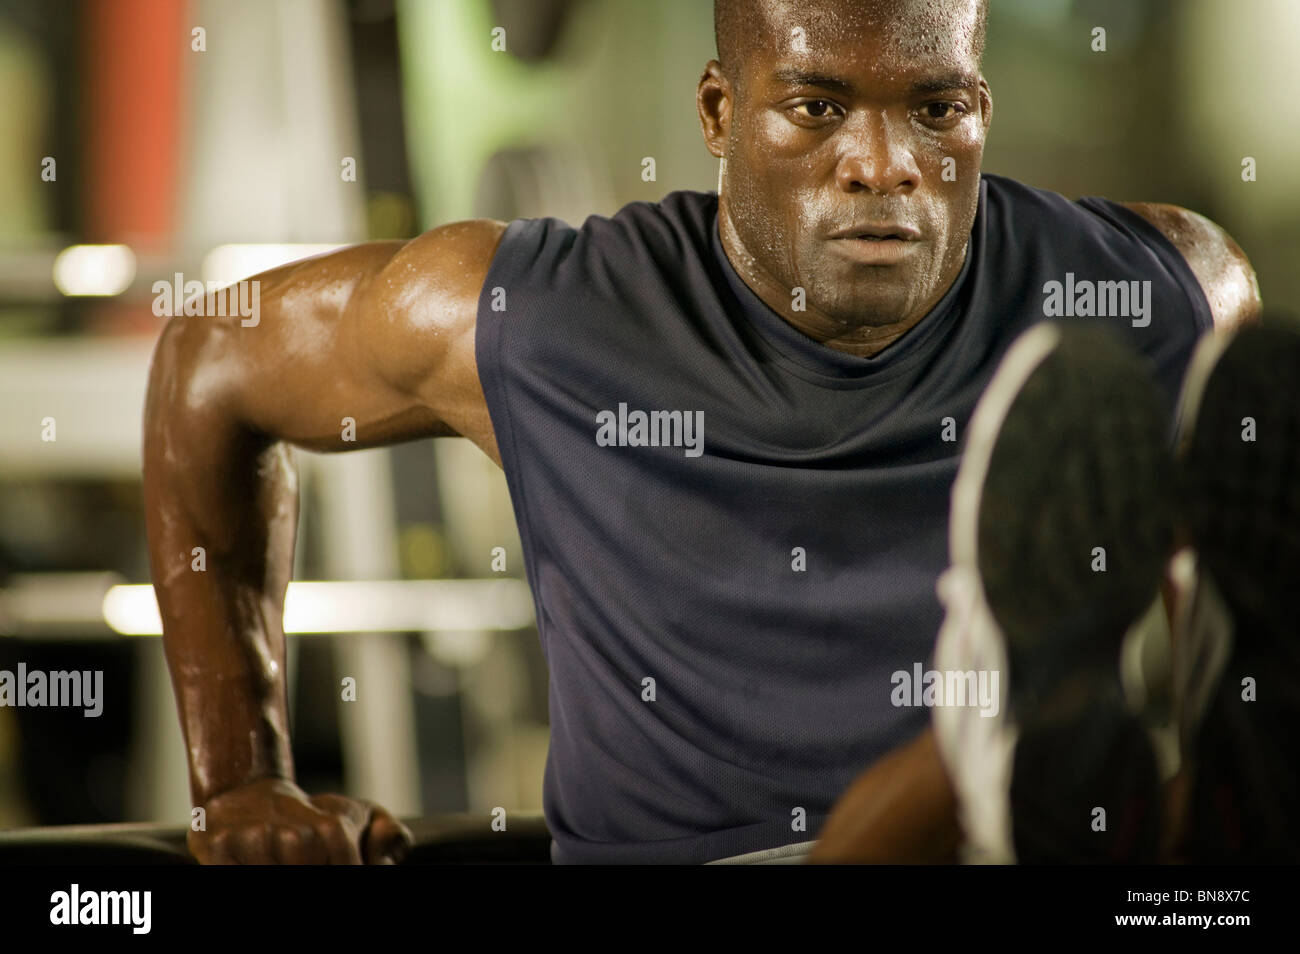 Man exercising in health club Stock Photo